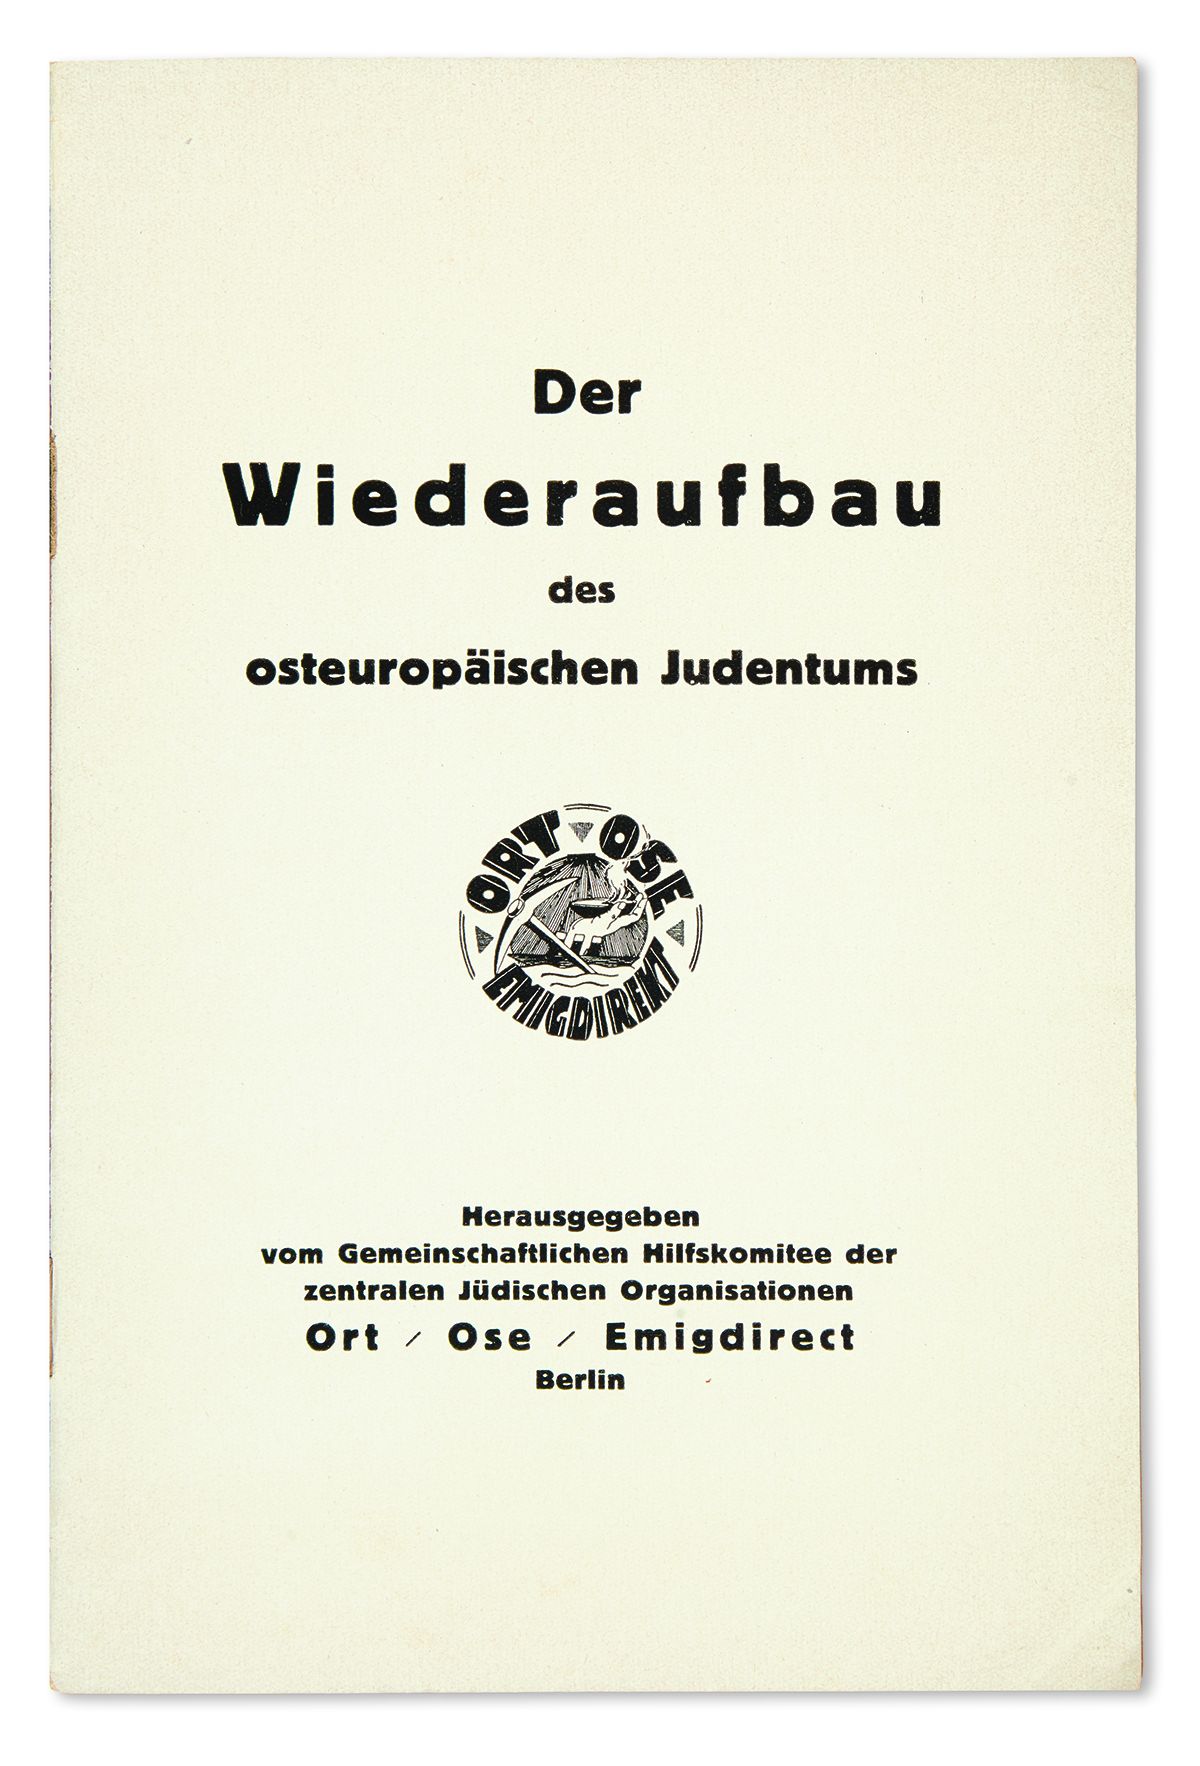 Der Wiederaufbau des osteuropäischen Judentums [“The Reconstruction of Eastern European Jewry.”]